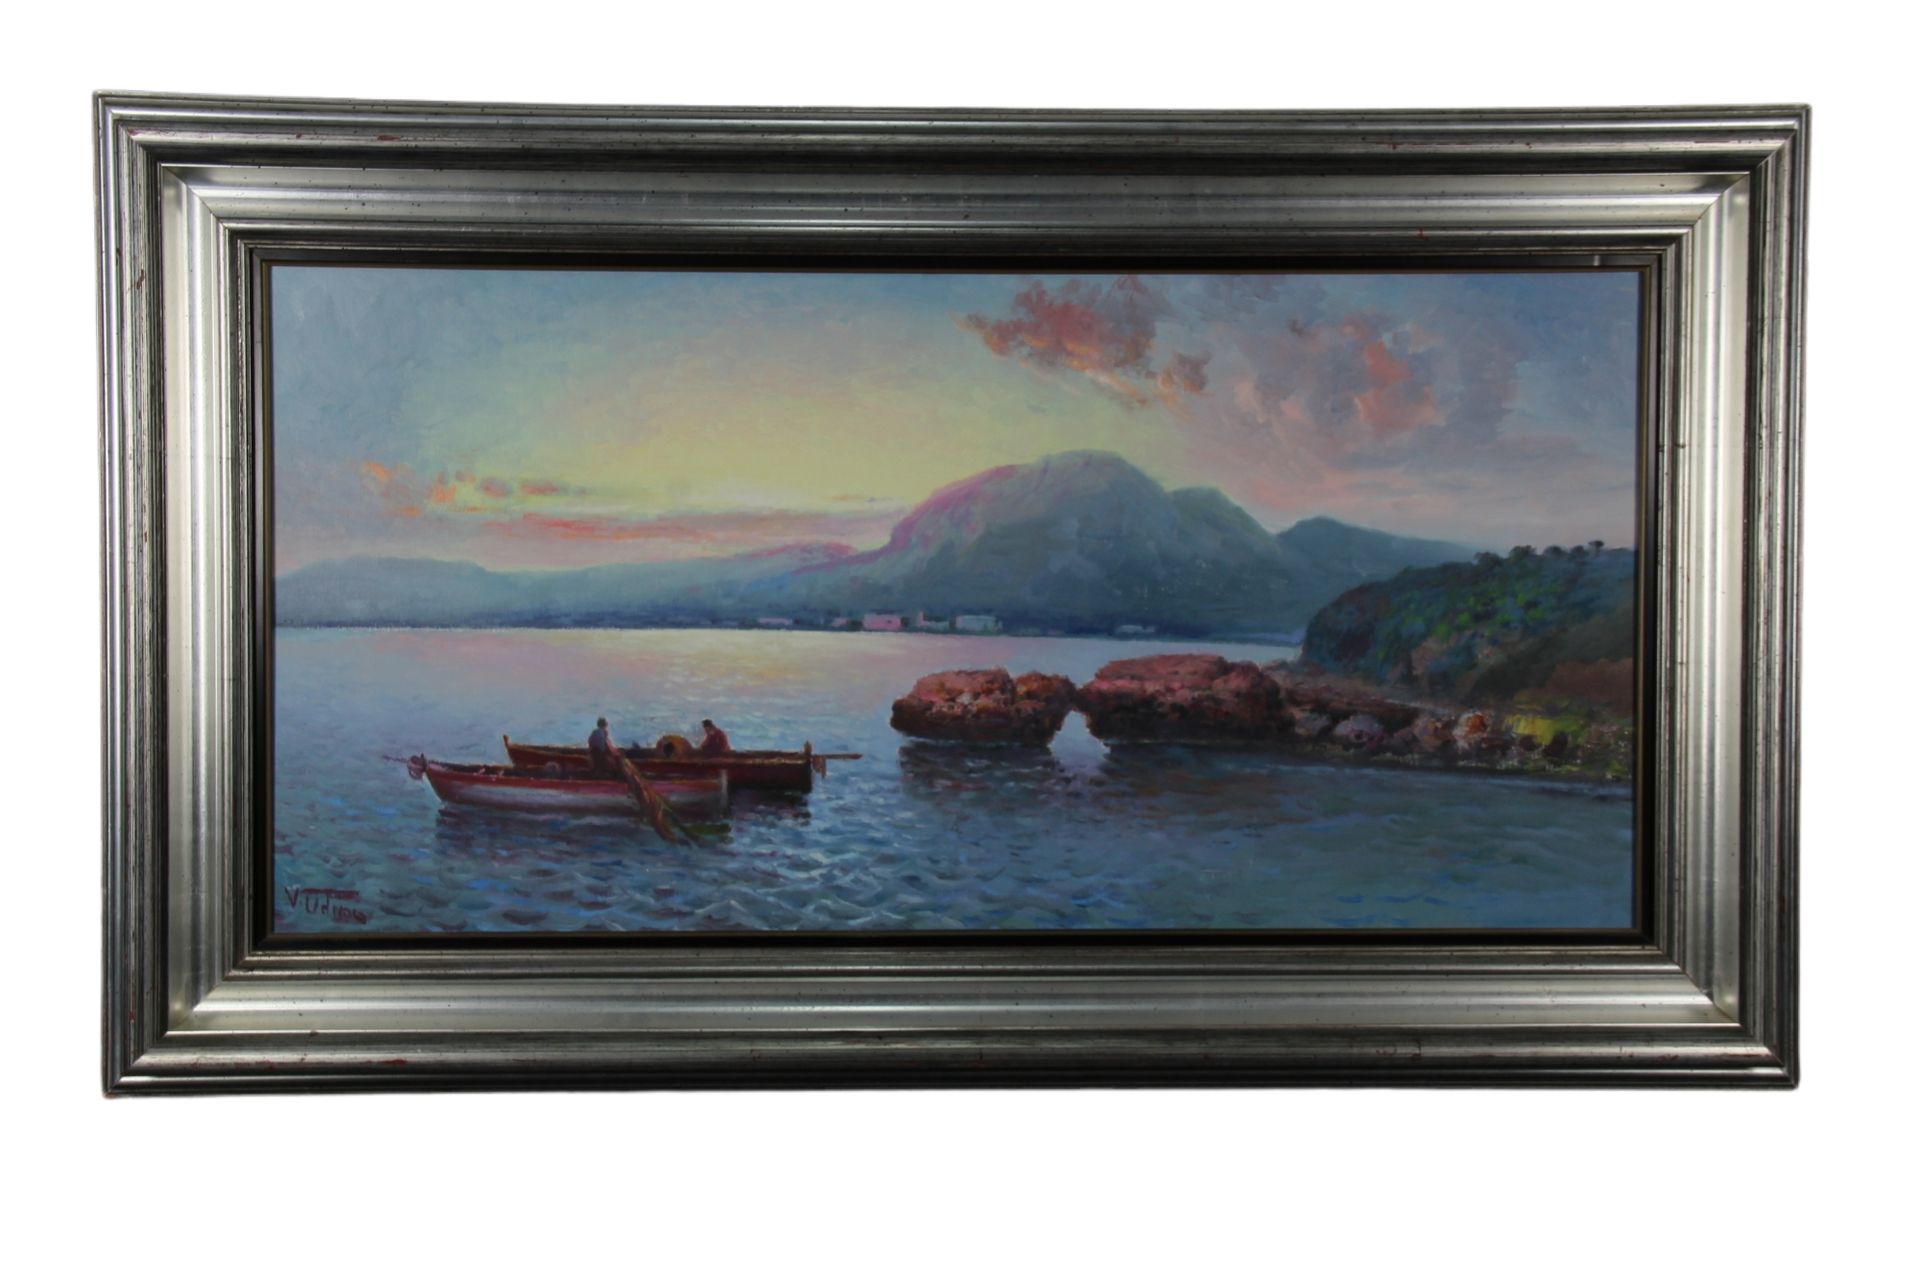 DIPINTO OLIO SU TELA Raff Marina with boats and fishermen at sunset , silver-pla&hellip;